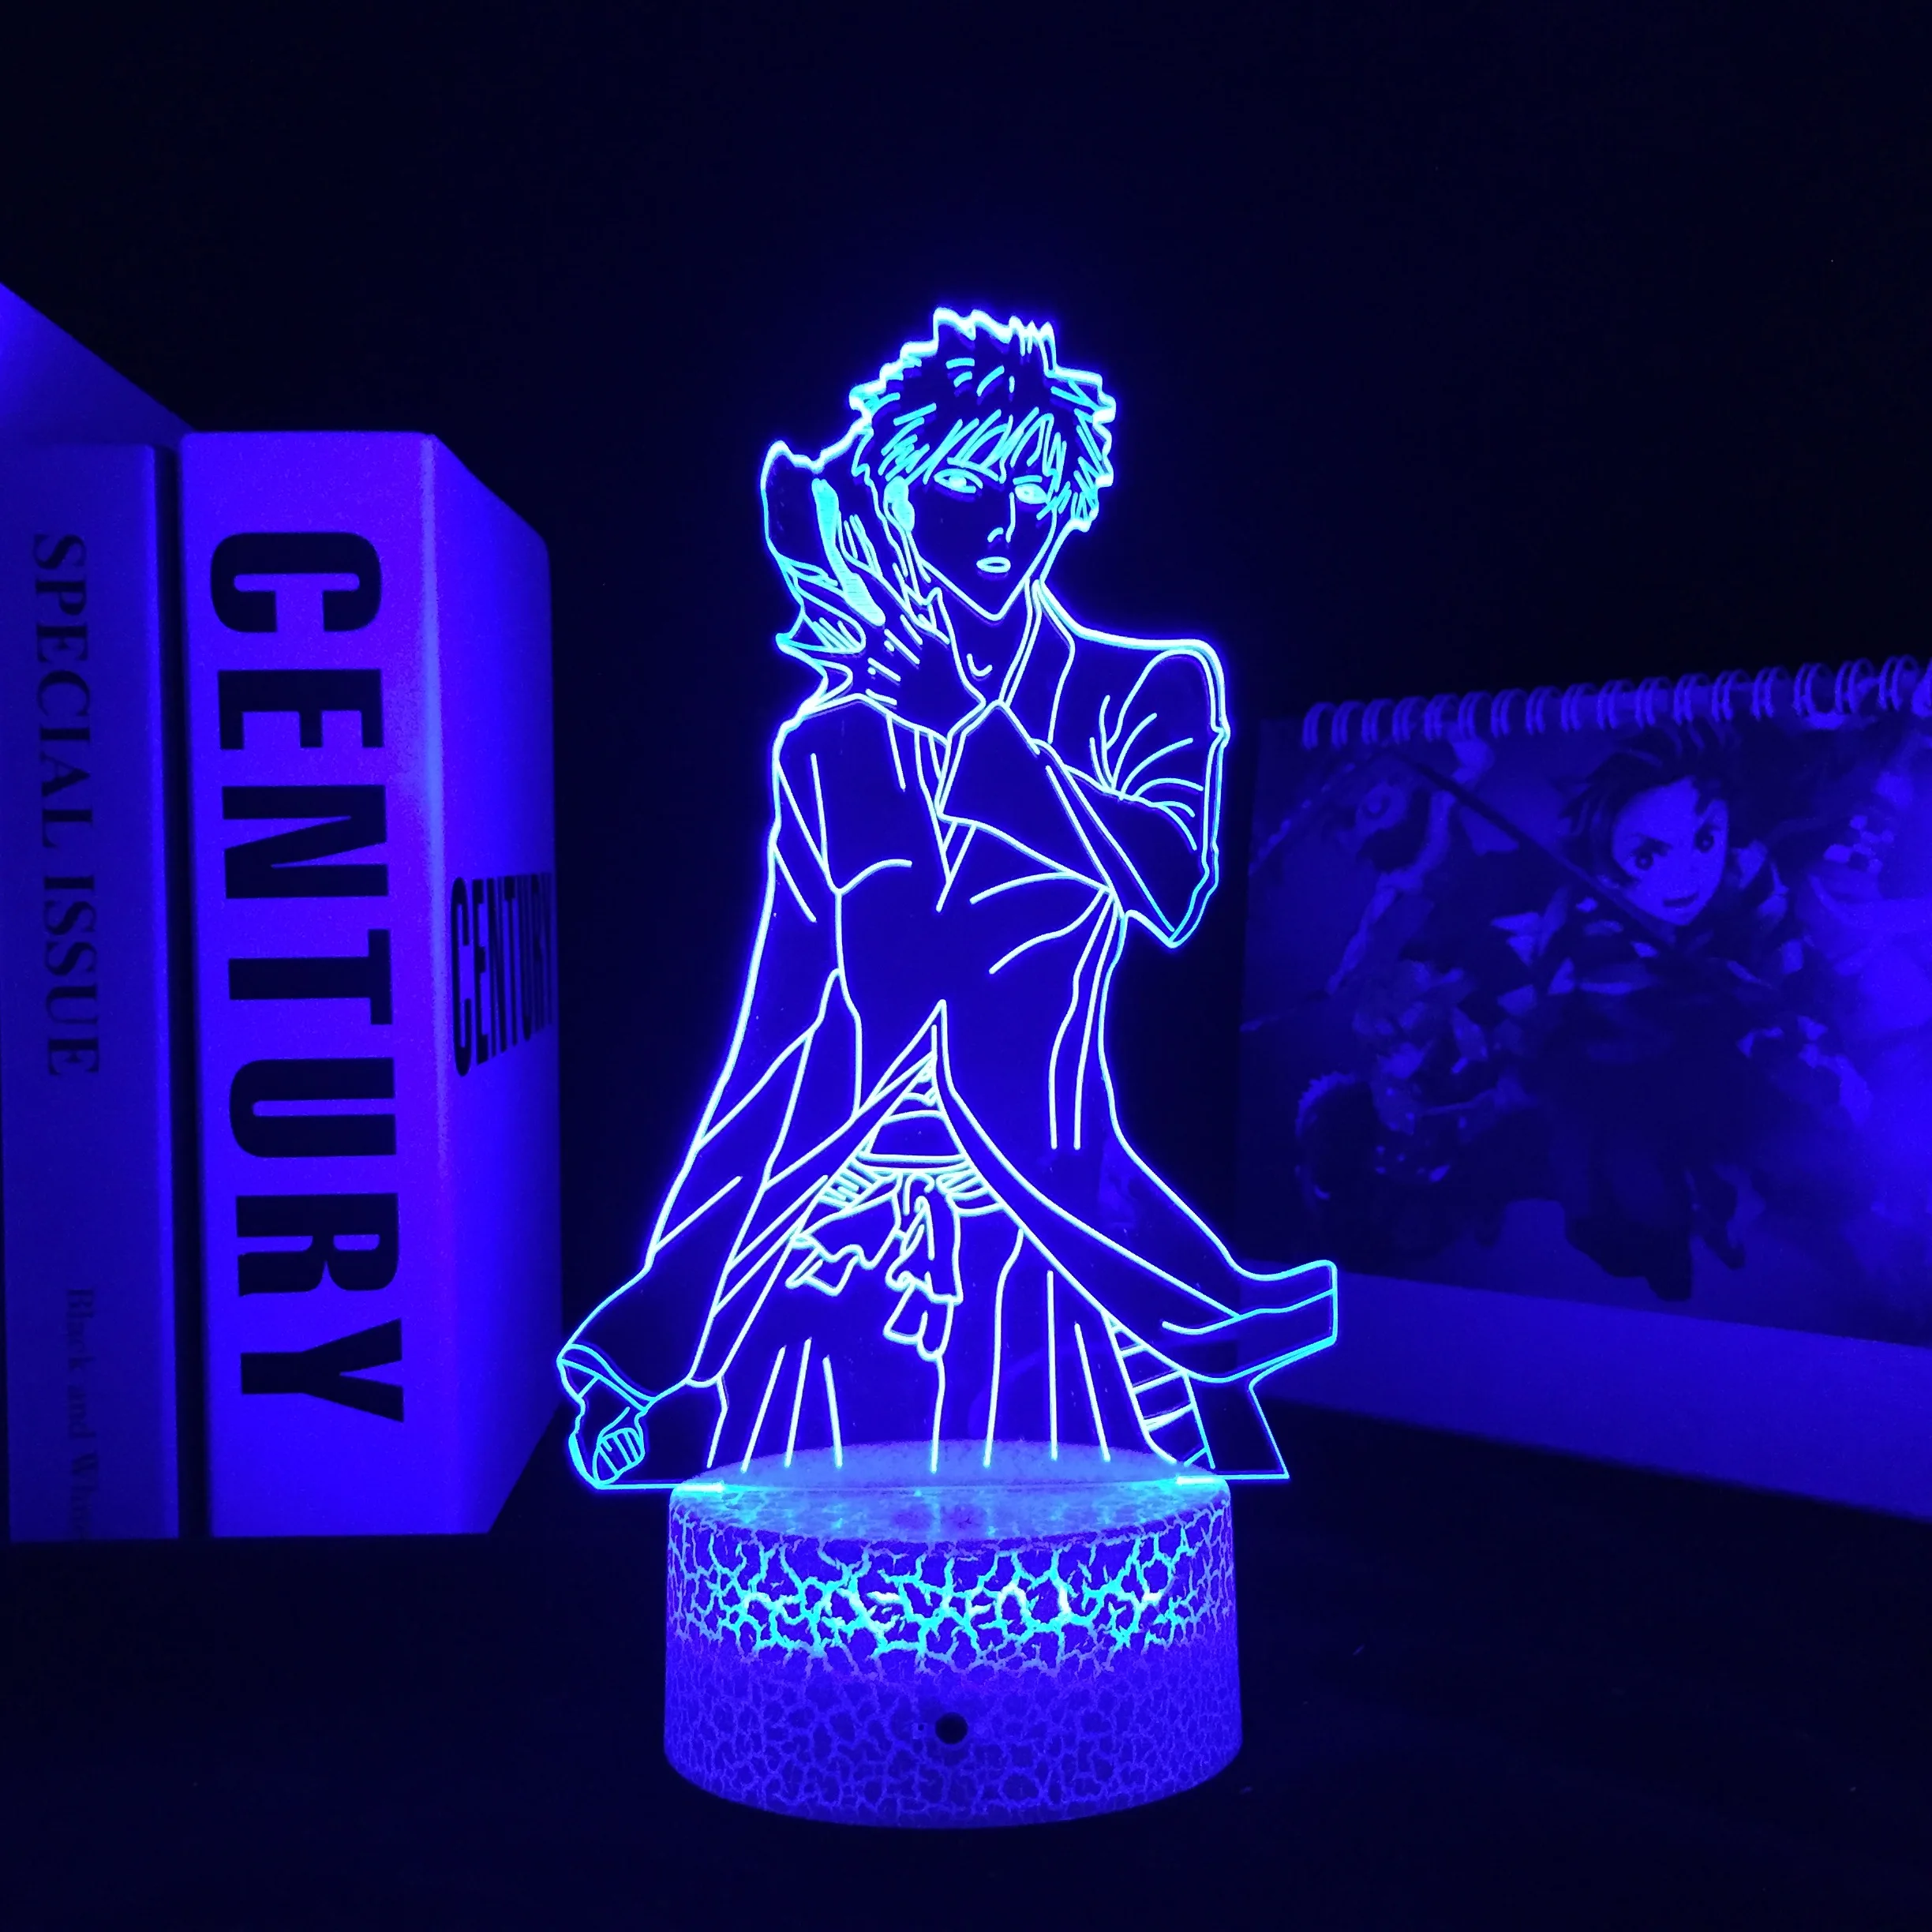 

Ichigo Kurosaki for Cool Birthday Gift Bedroom Decor Nightlight Acrylic LED Night Light Bleach Anime Bleach 3D Lamp Dropshipping